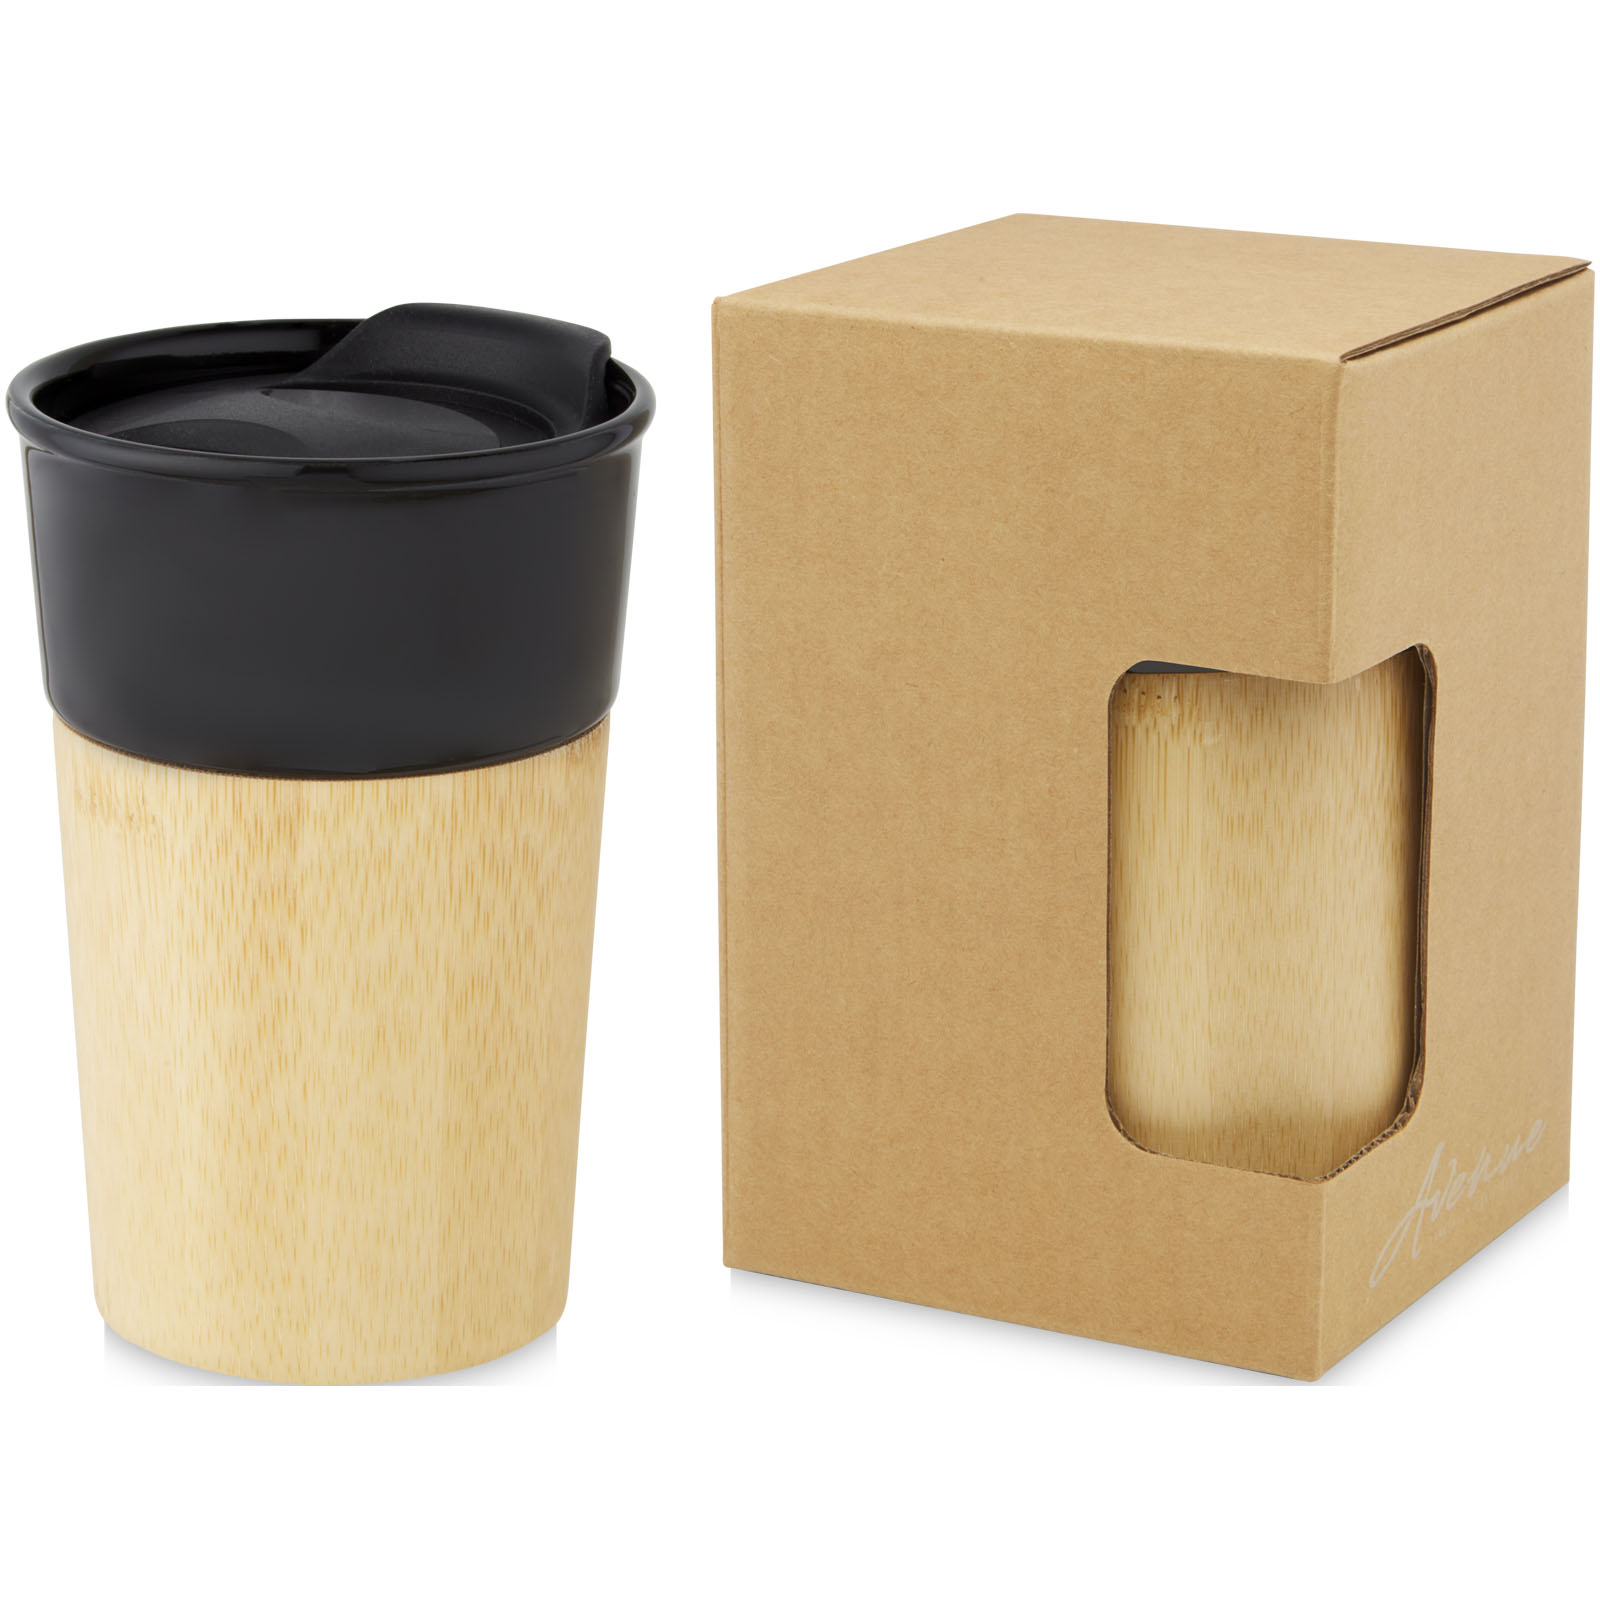 Standard mugs - Pereira 320 ml porcelain mug with bamboo outer wall